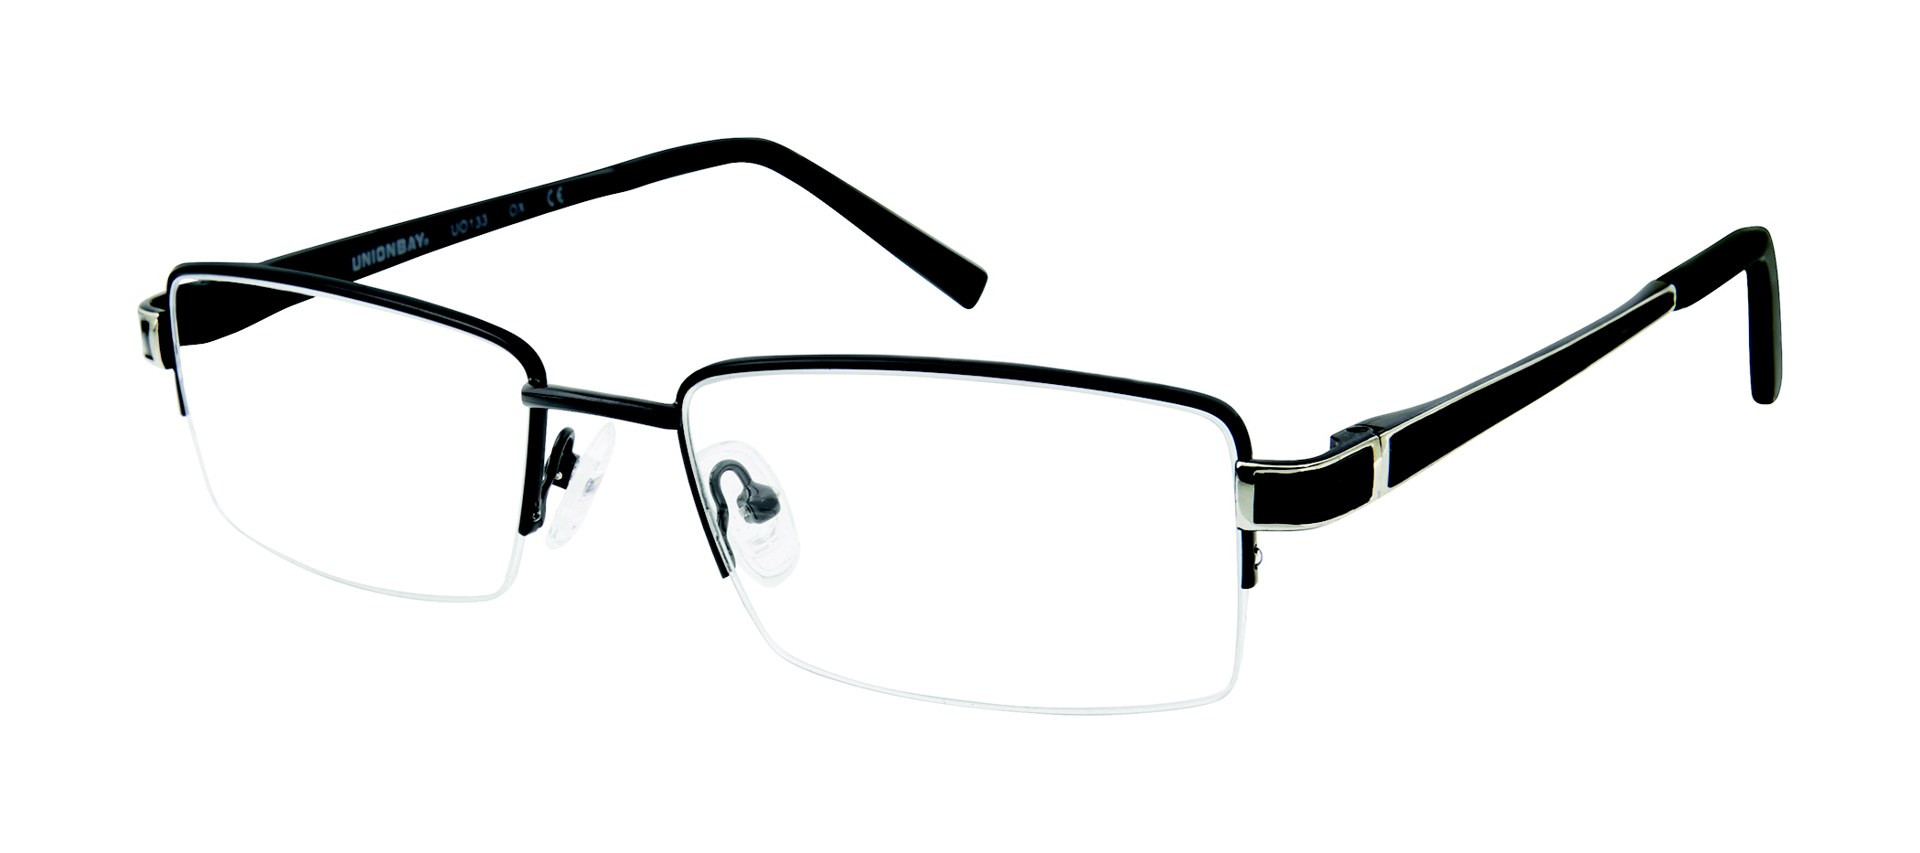 Union Bay UO133 Eyeglasses